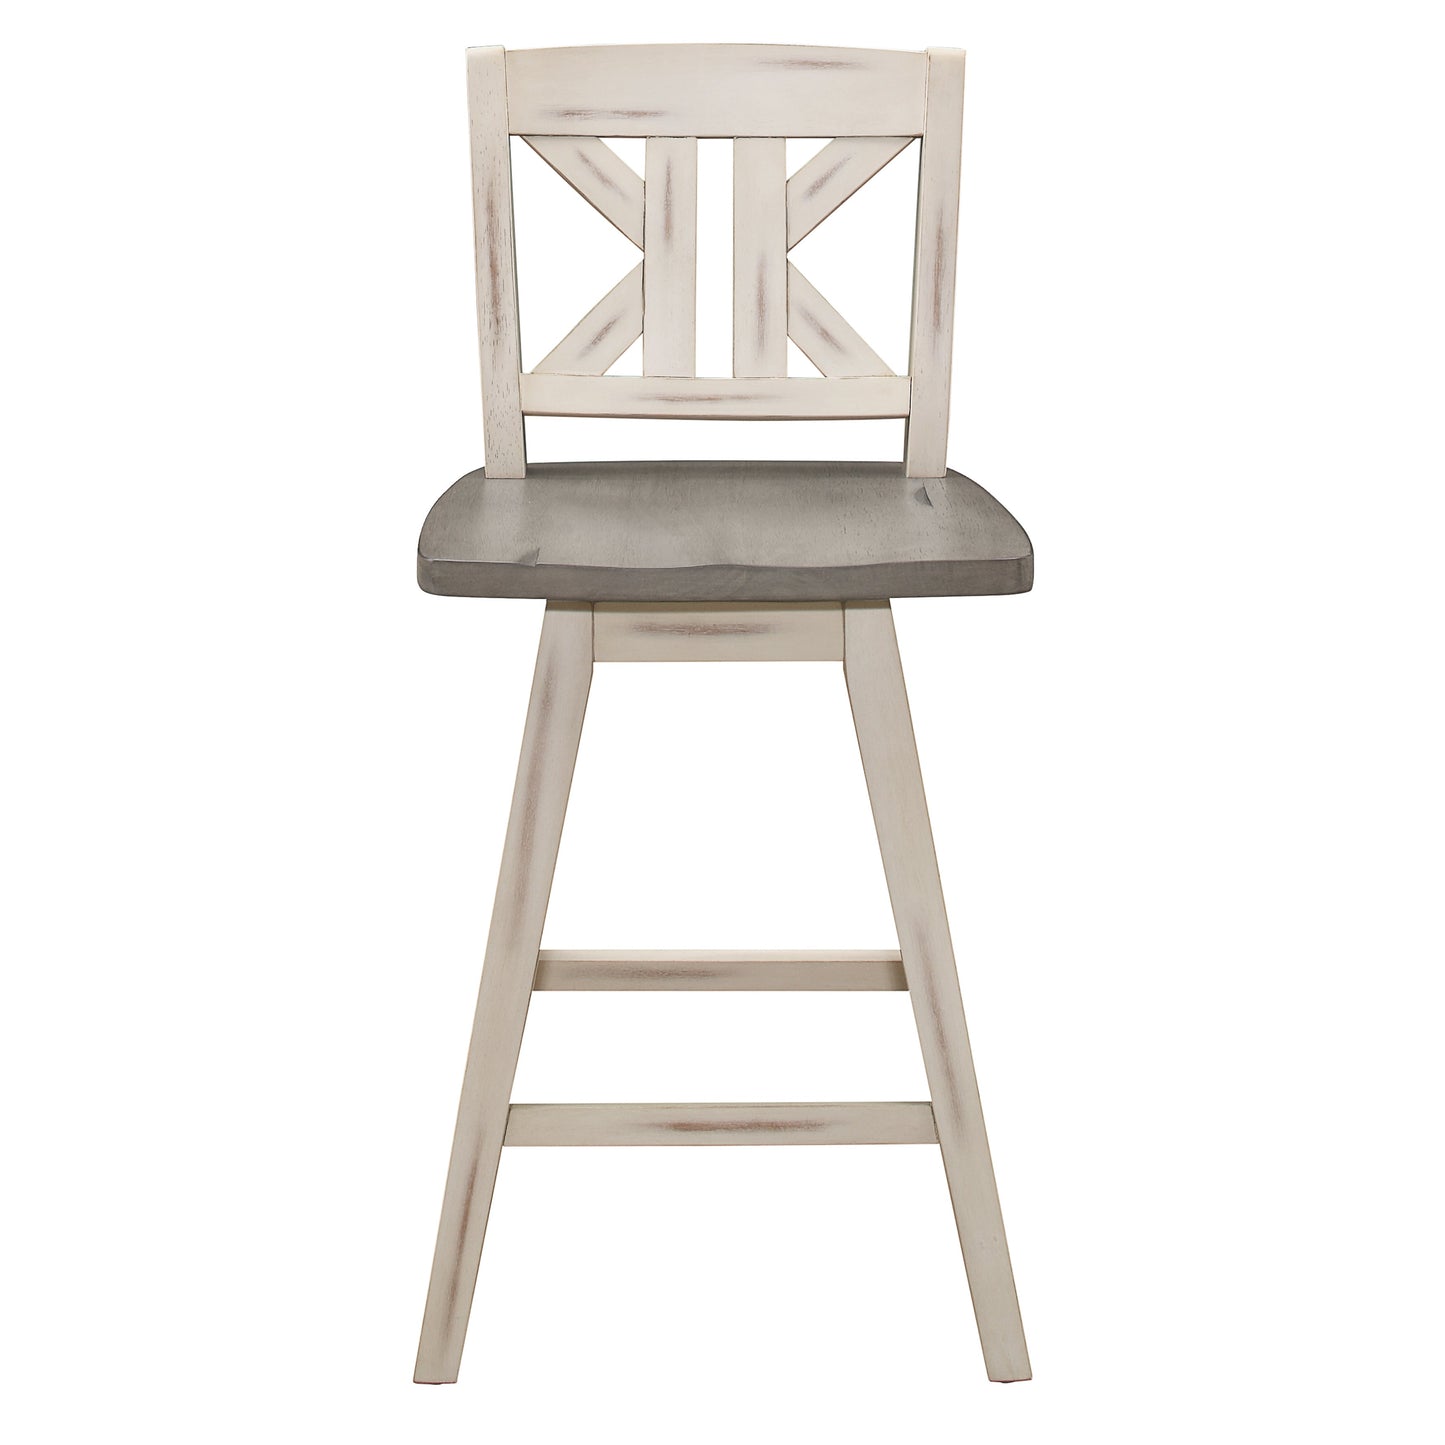 Amsonia Gray/White Swivel Counter Height Chairs, Set of 2